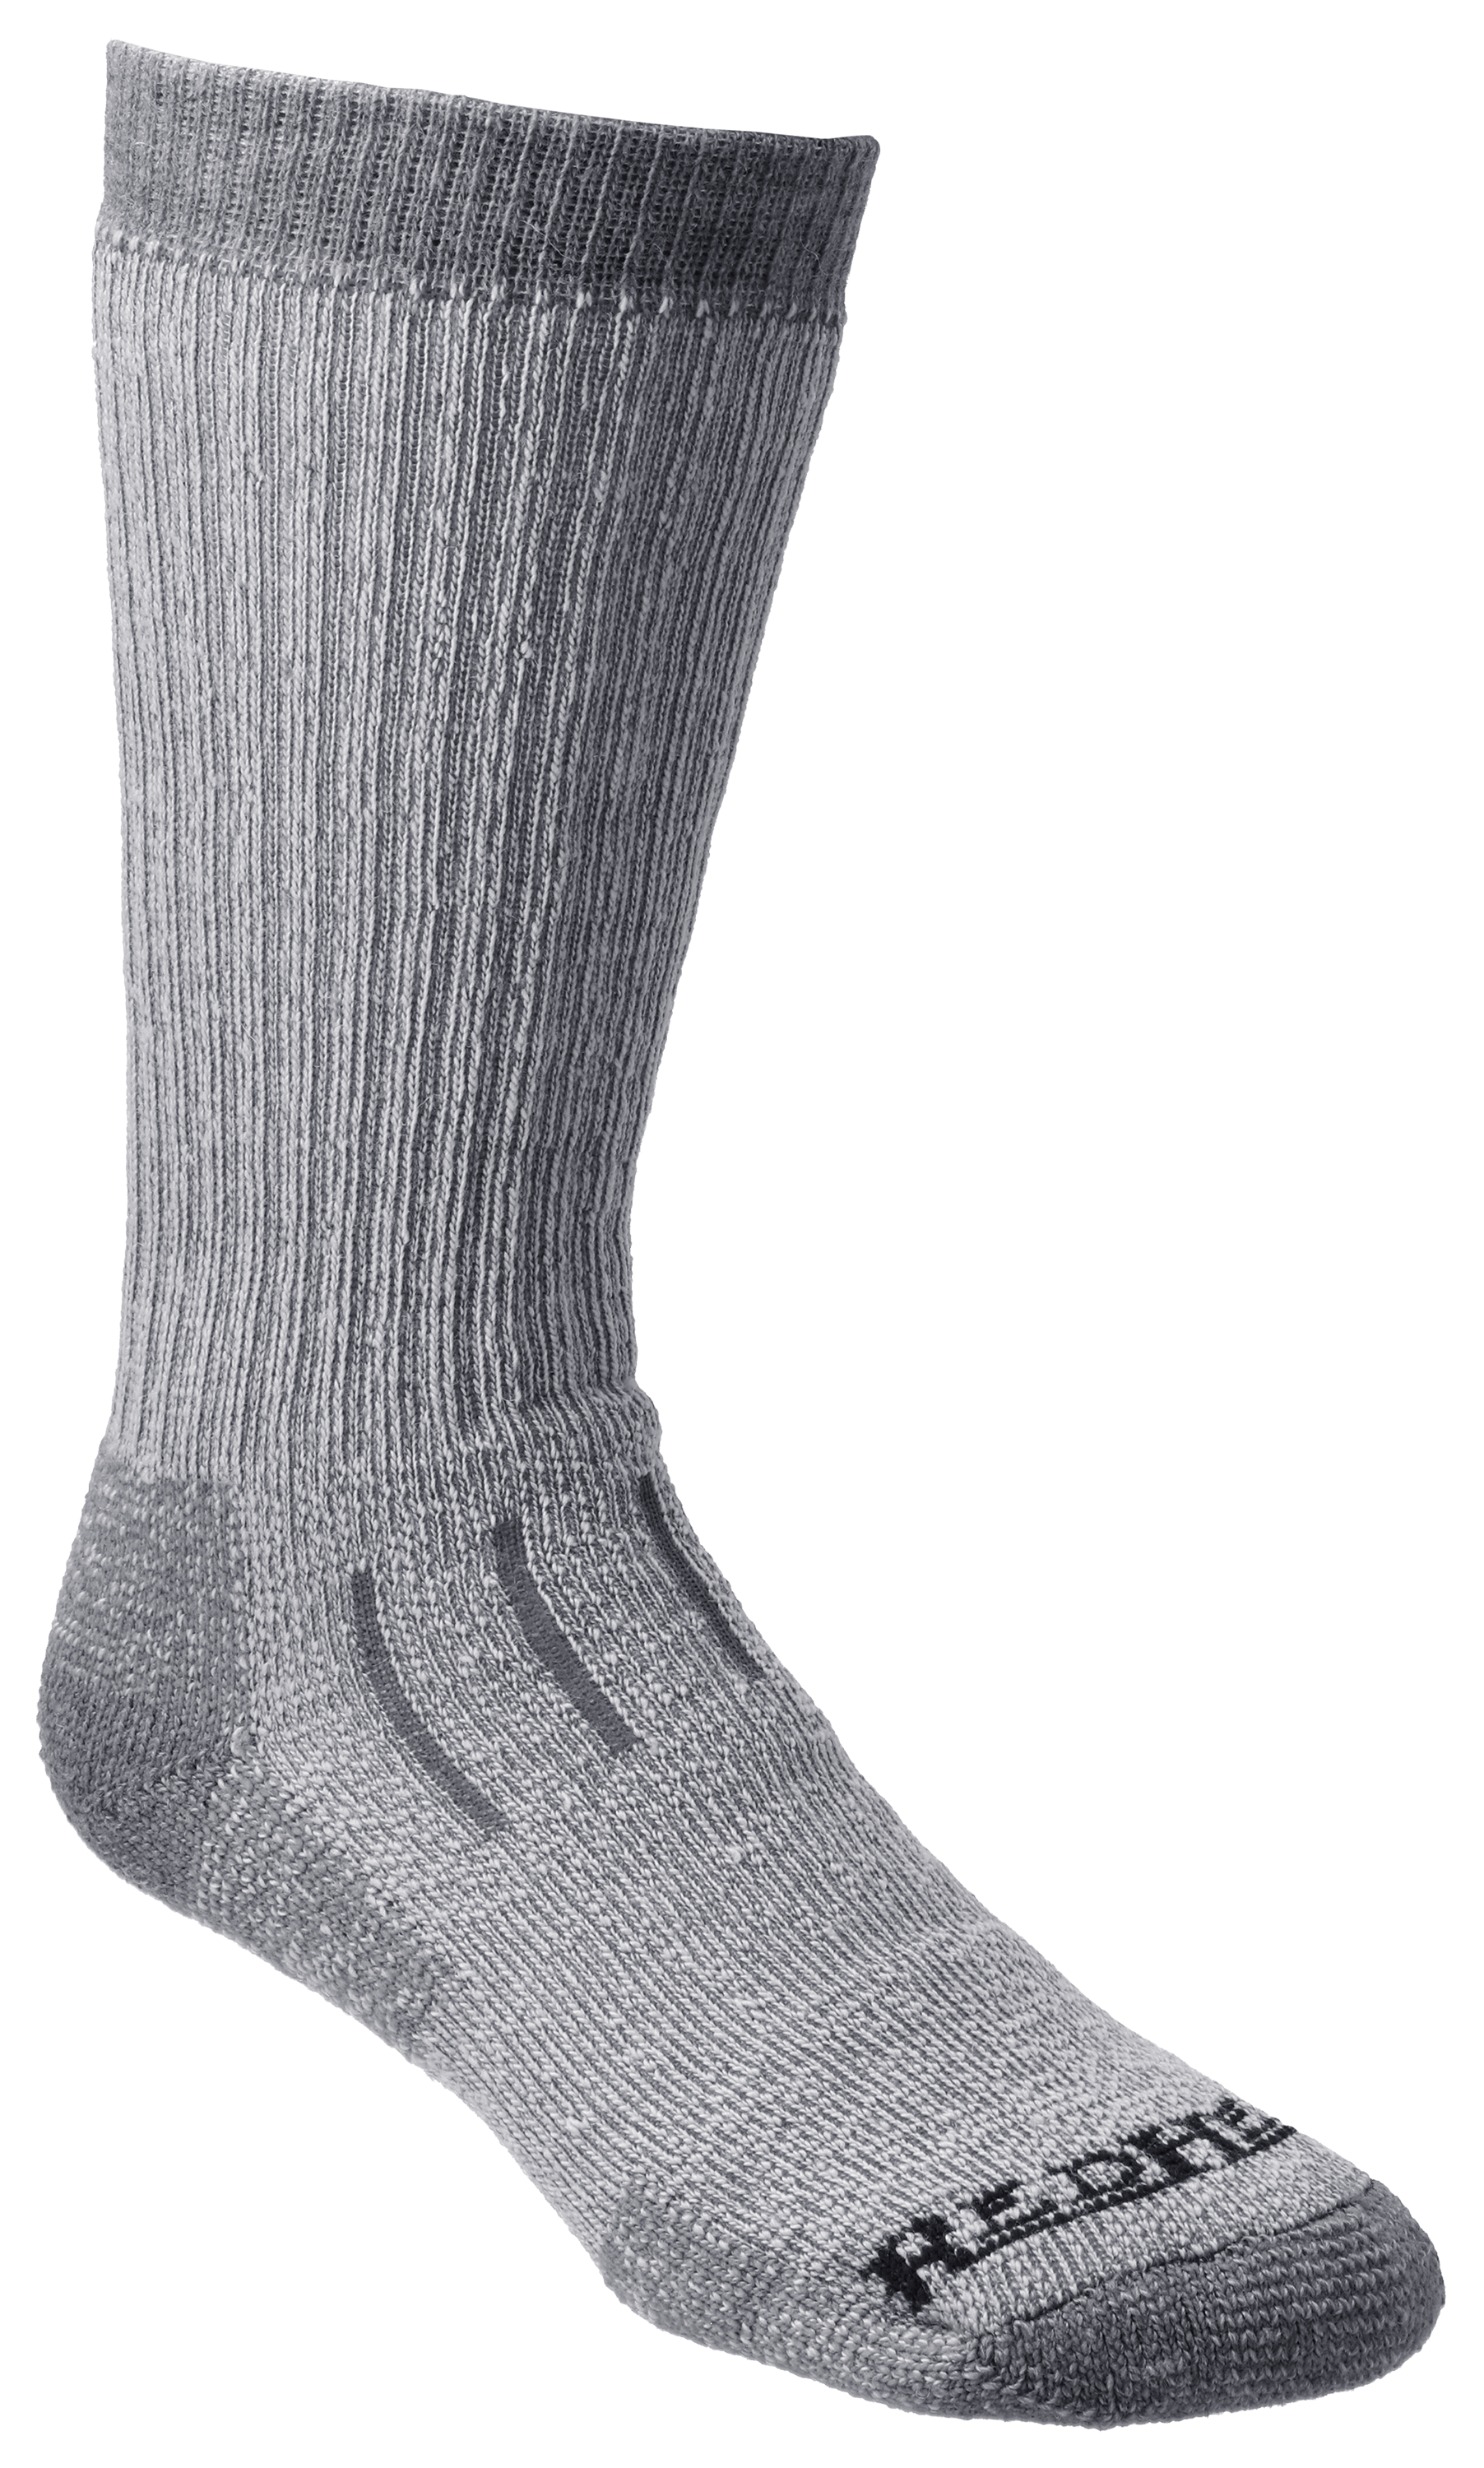 Omni Wool Unisex Merino Wool Multi-Sport Warm Hikers Hunting Socks, 3 Pairs  (Red/Blue/Grey, M)